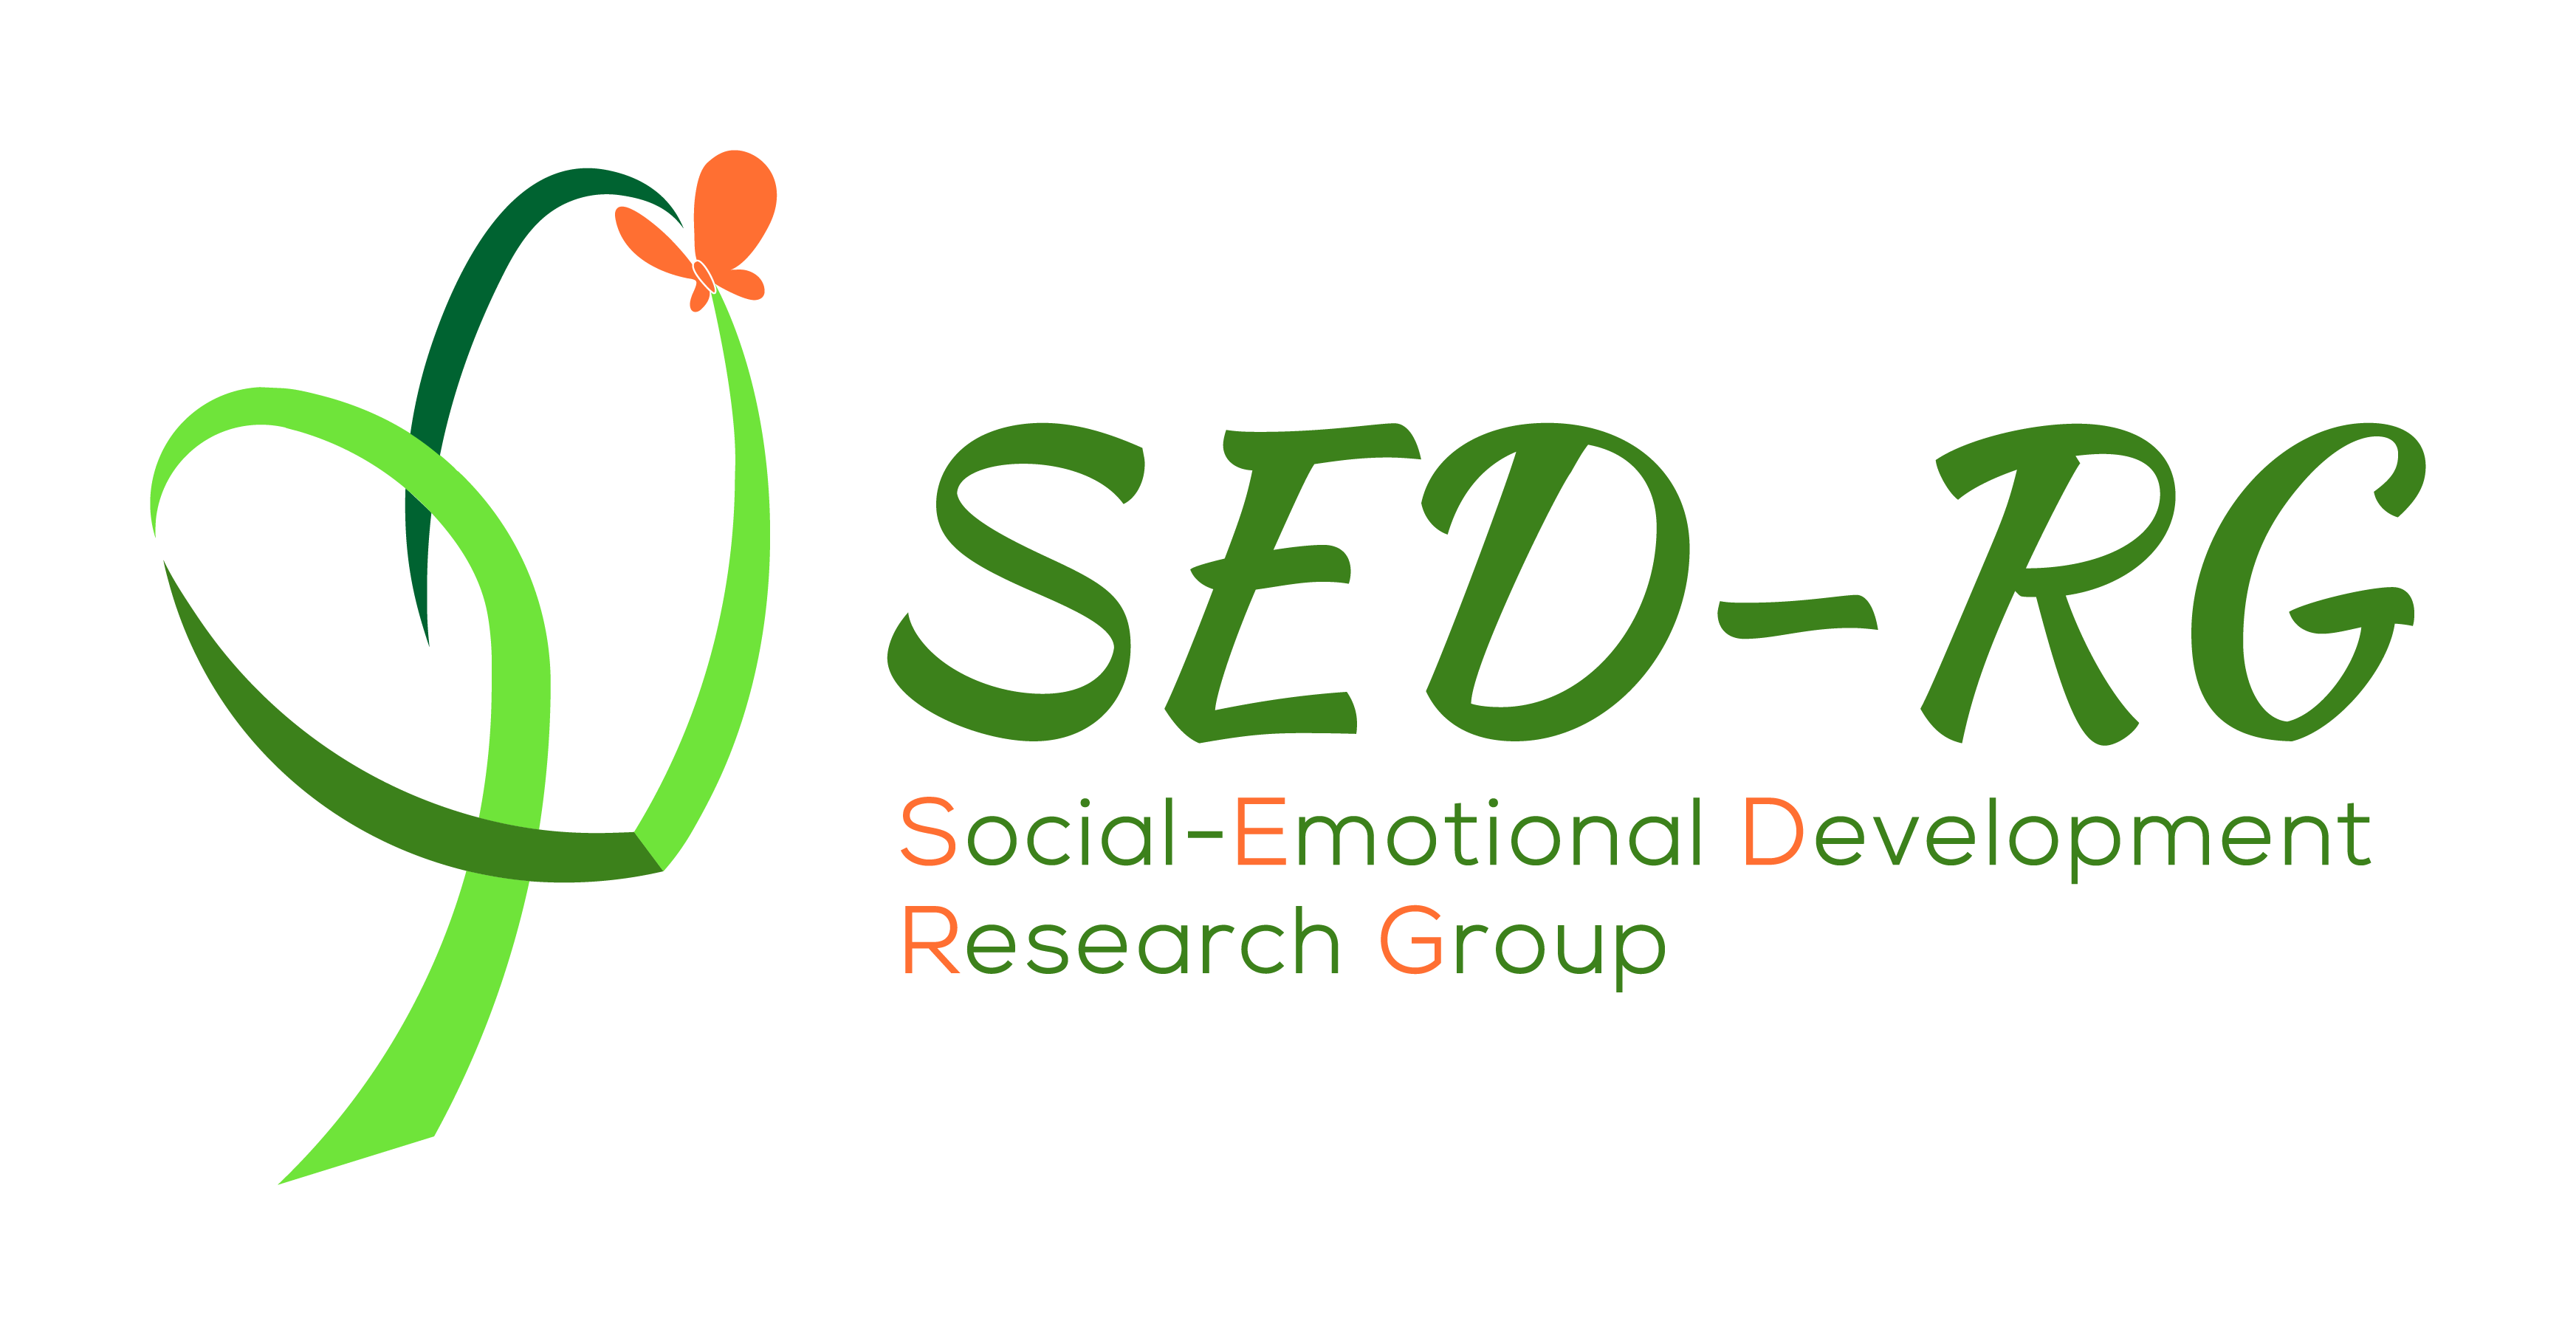 Social-Emotional Development Research Group